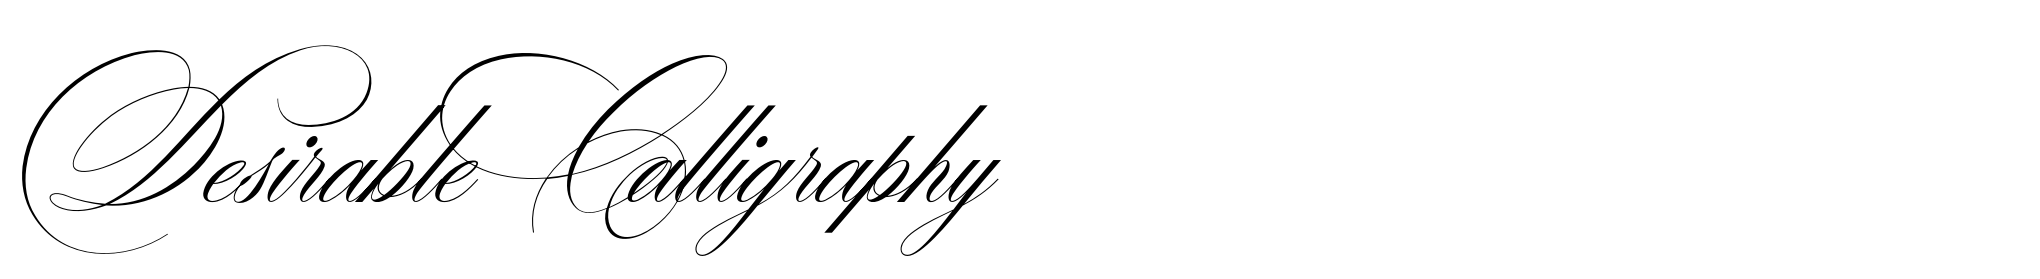 Desirable Calligraphy image